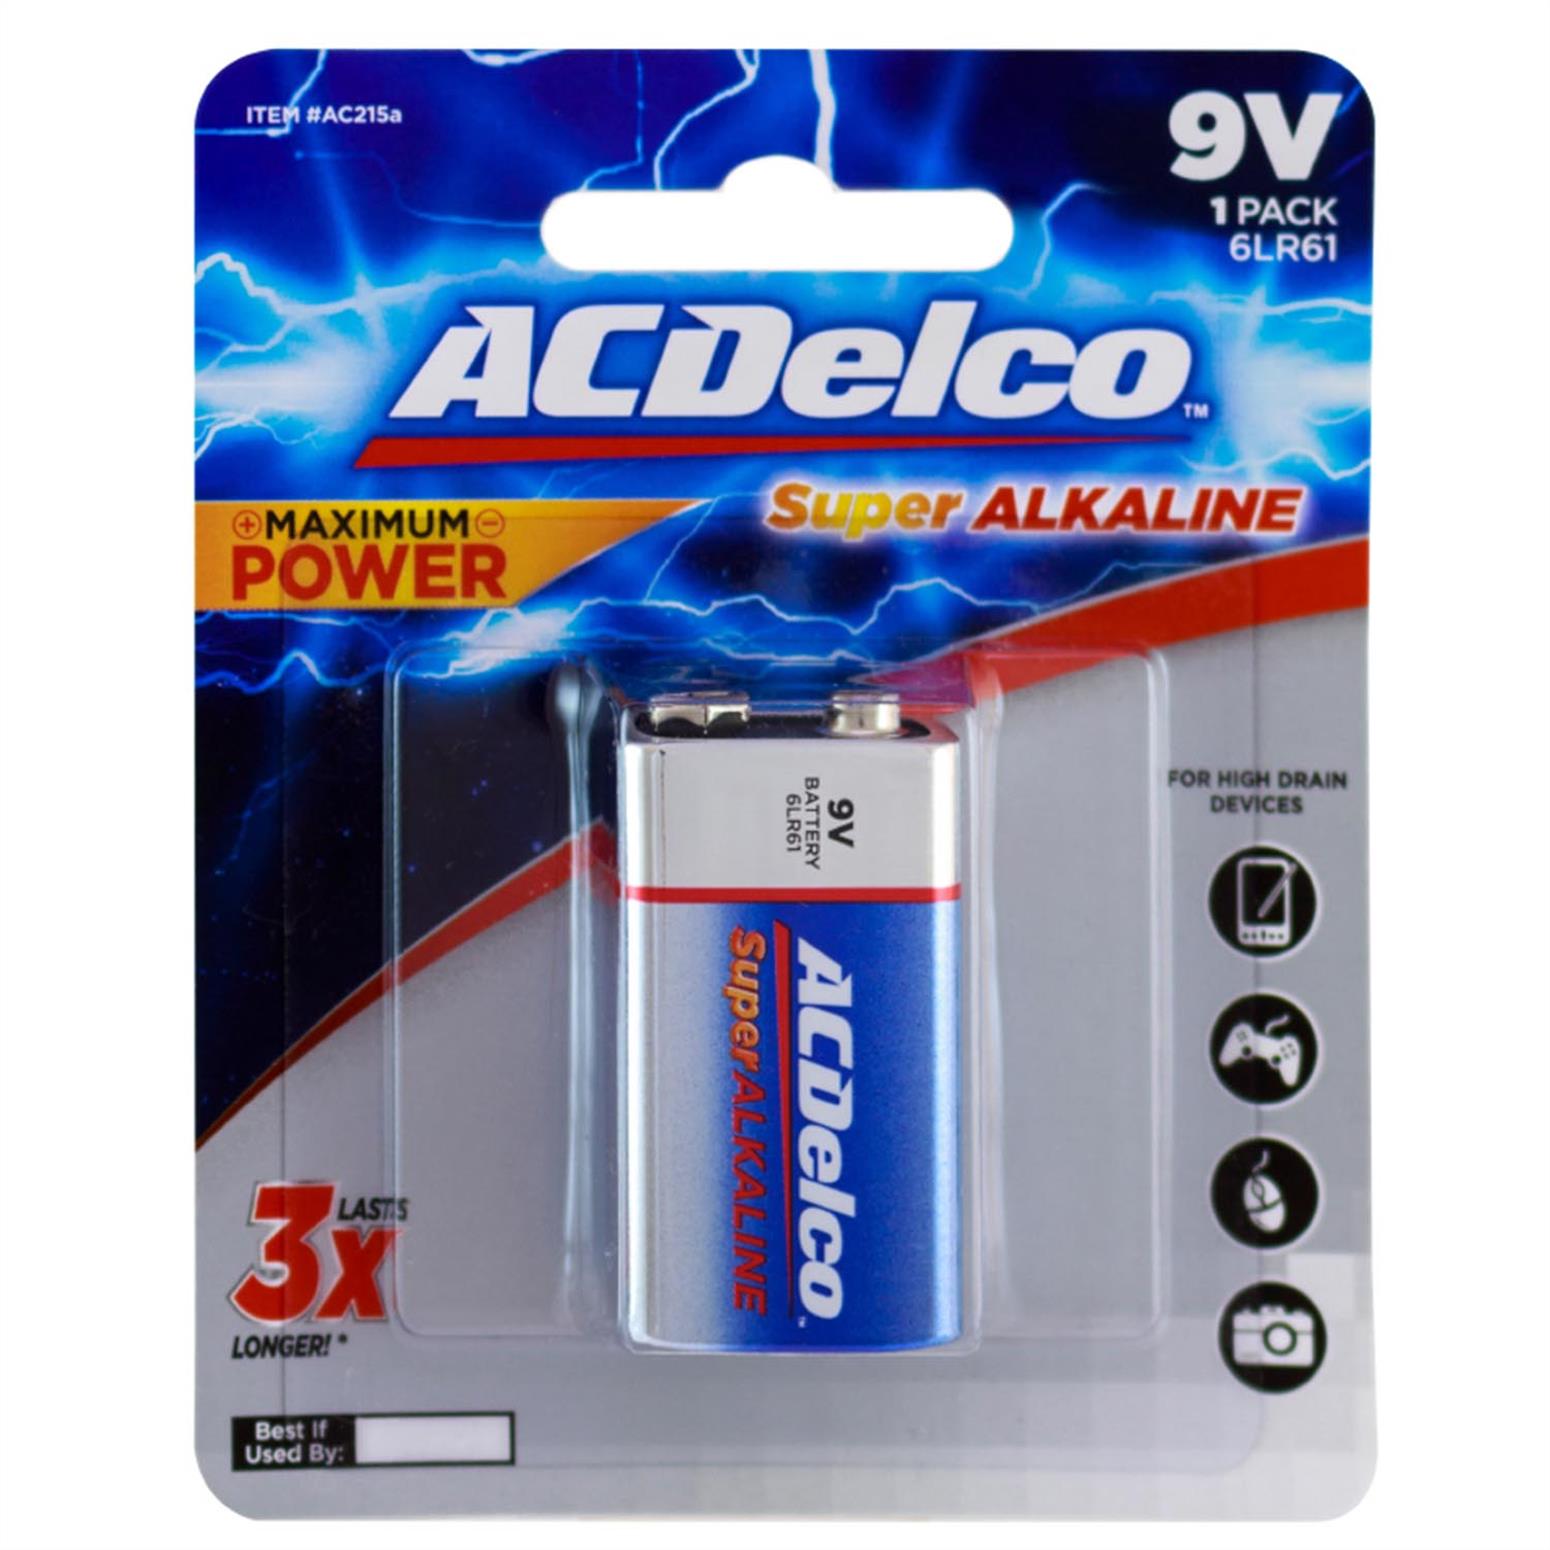 ACDelco Liquid Alkaline Battery 9 Volt Pack of 1 Piece